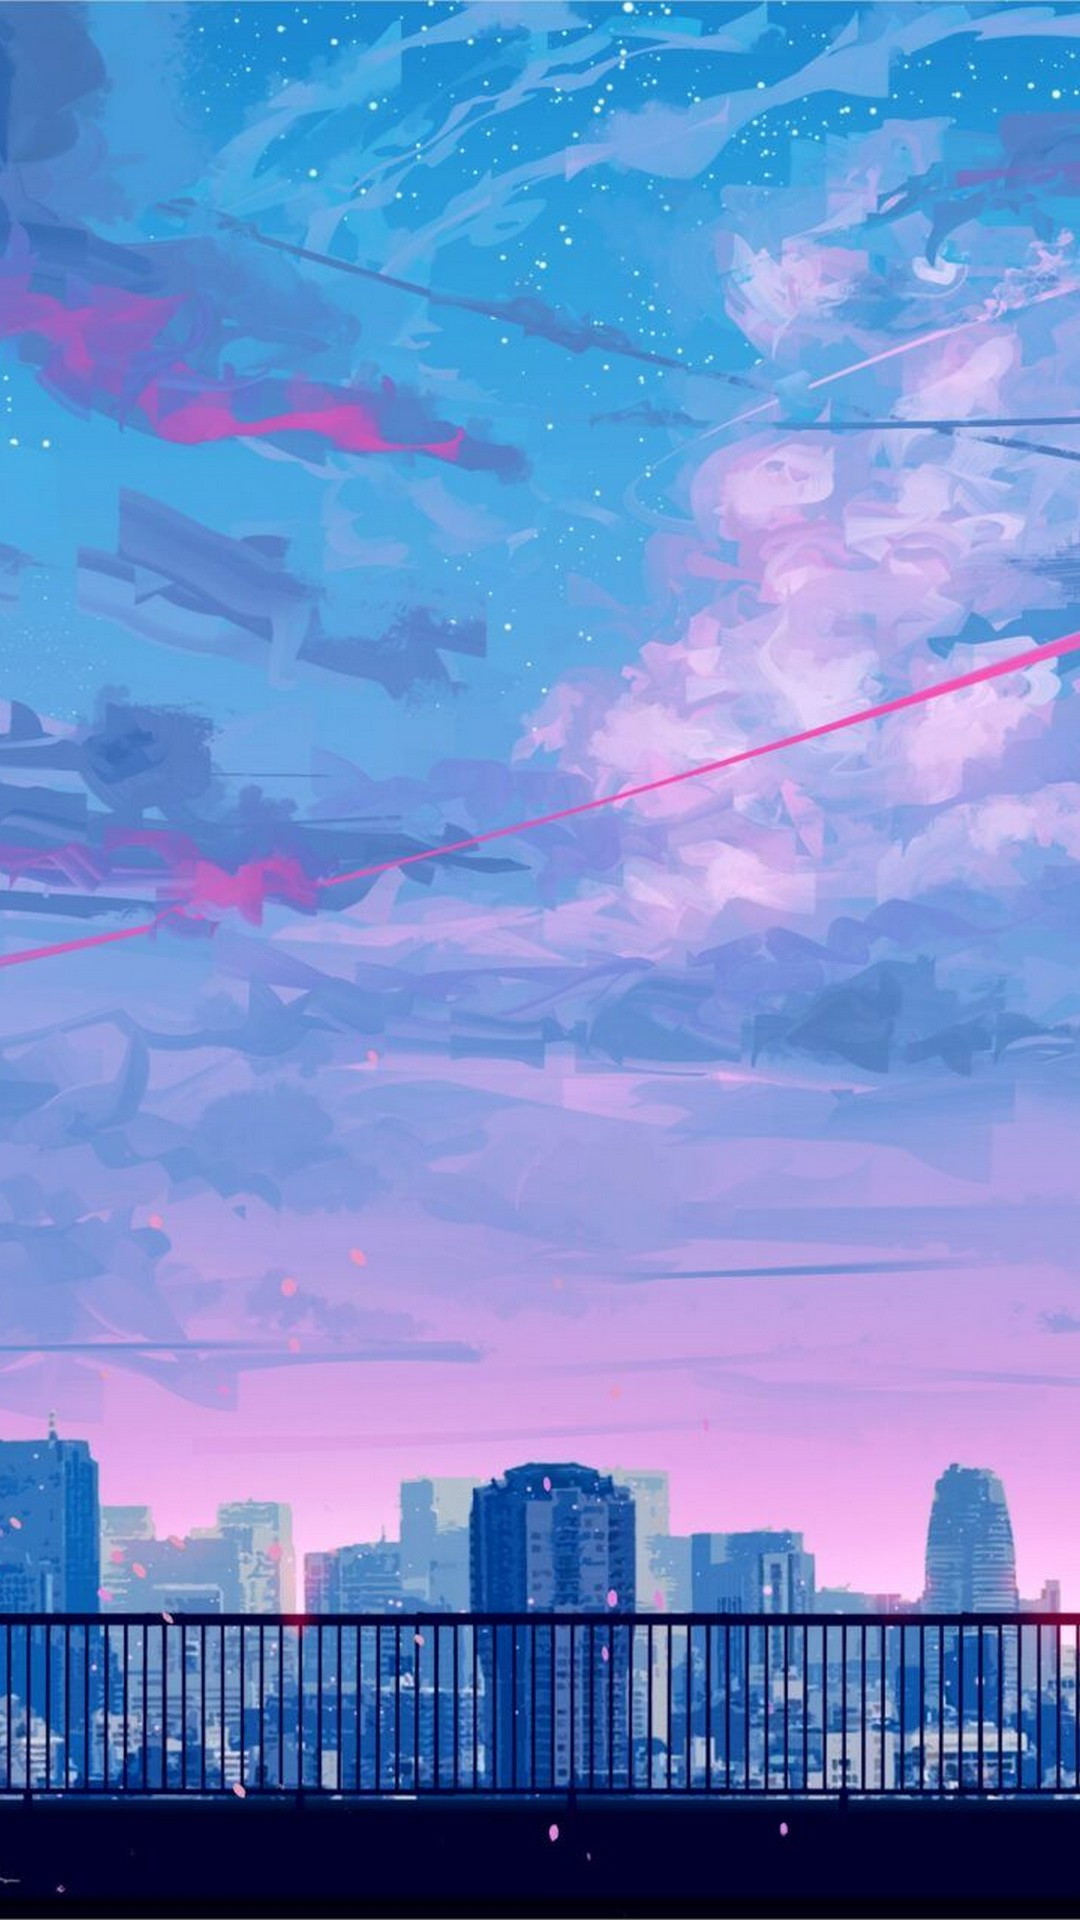 Anime aesthetic iphone wallpaper